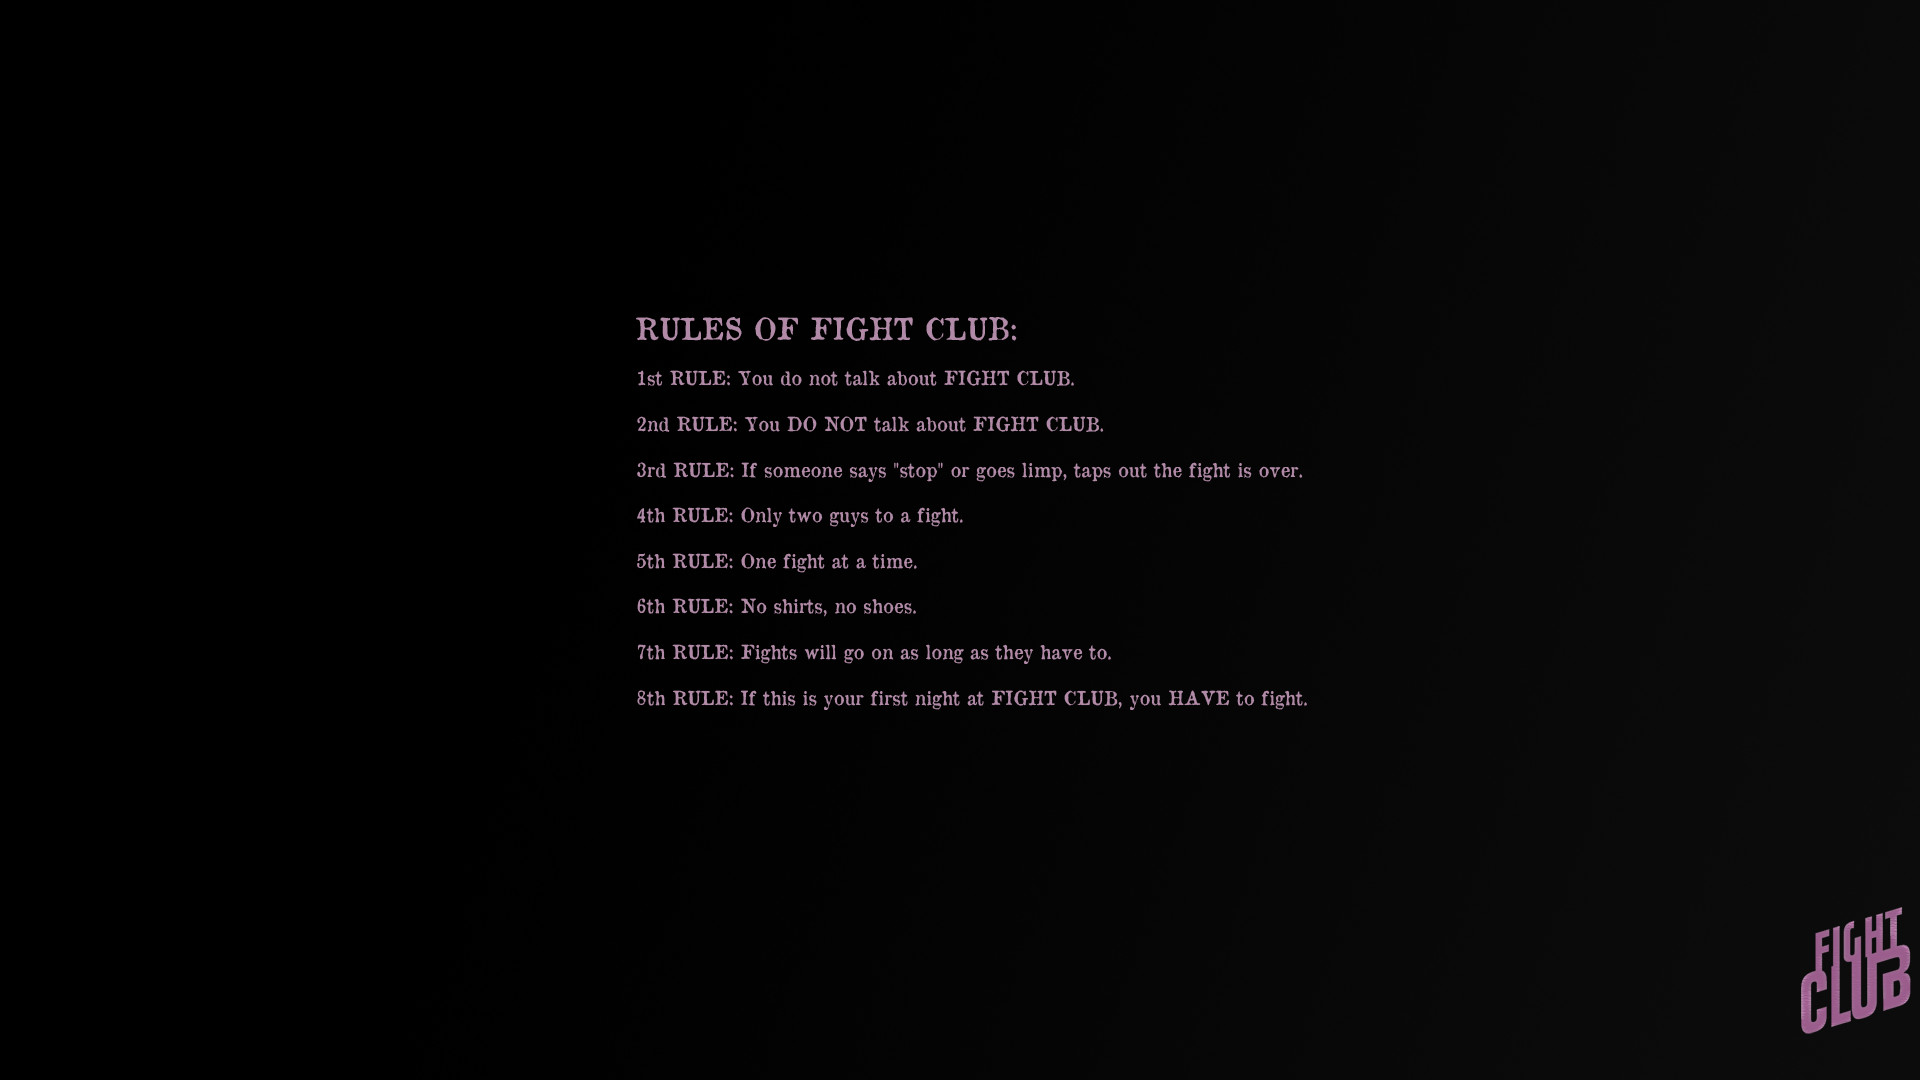 Rule 34 fight club. Fight Club Rules. Восемь правил бойцовского клуба. Fight Club Wallpaper 1920 1080. Правила бойцовского клуба на английском.